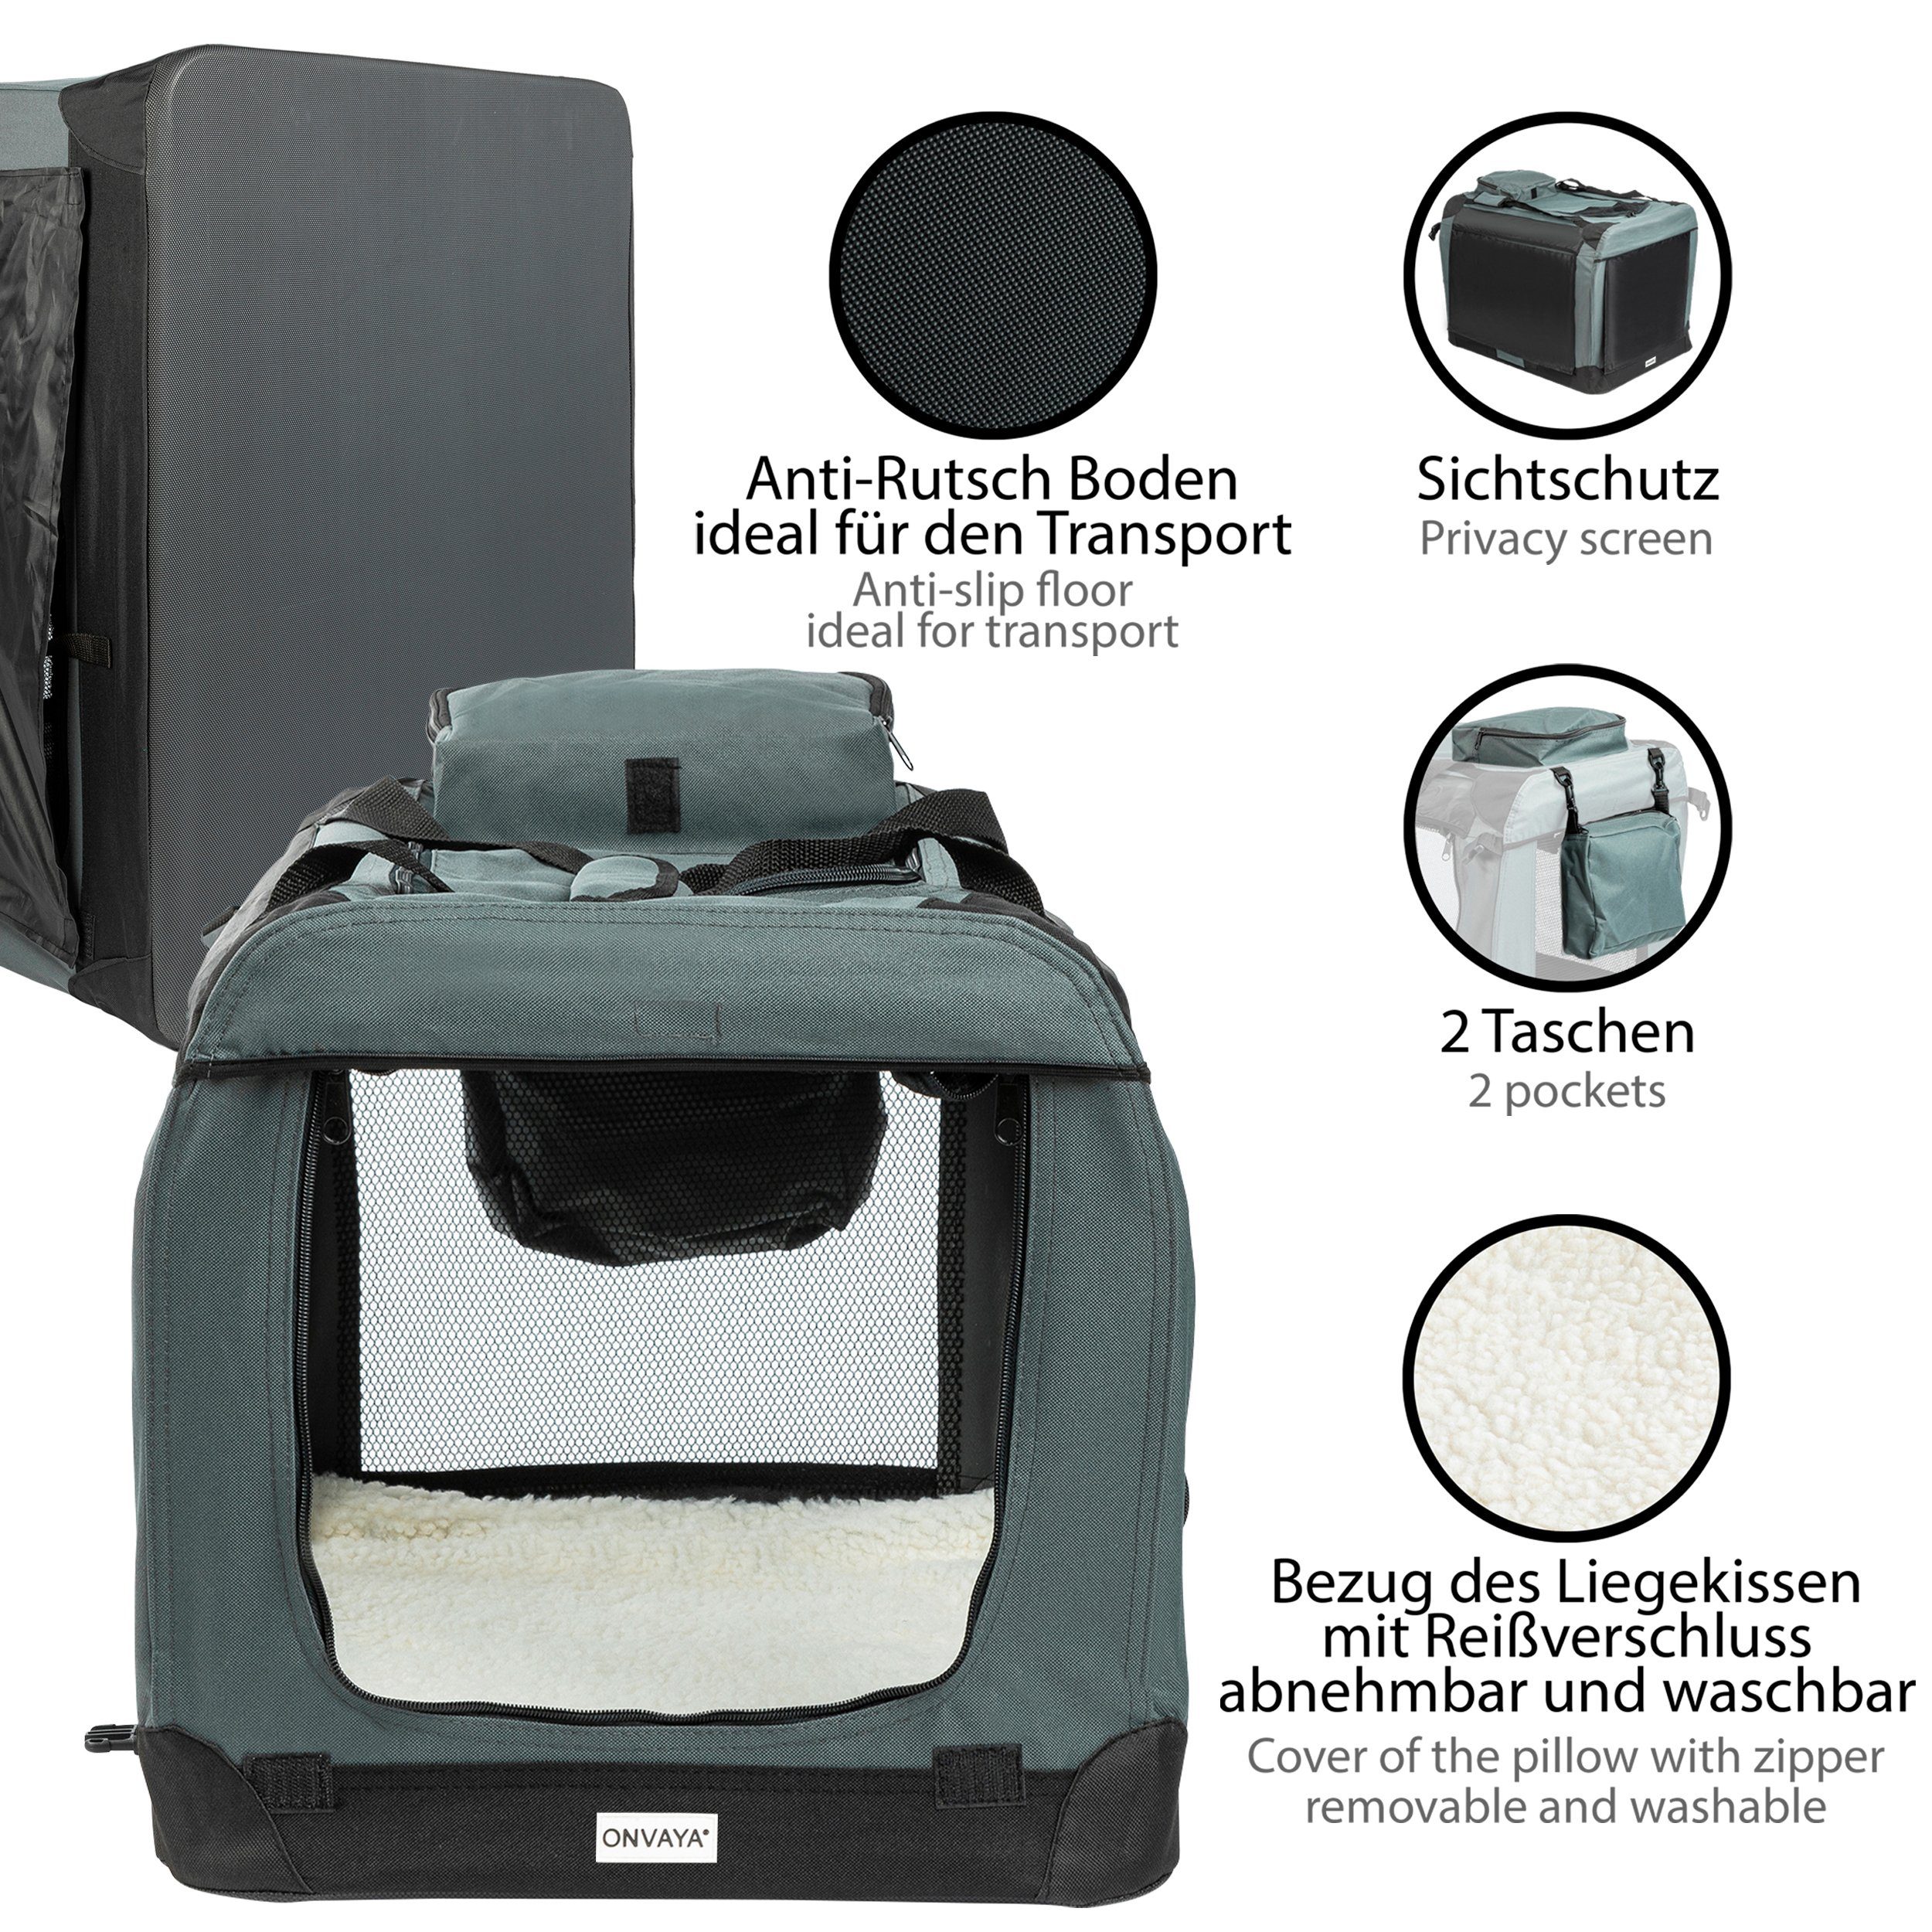 ONVAYA Hunde-Autositz »Faltbare Transportbox für Hunde & Katzen, Faltbare  Hundebox oder Katzenbox für Auto & Zuhause, Farbe grau schwarz« online  kaufen | OTTO